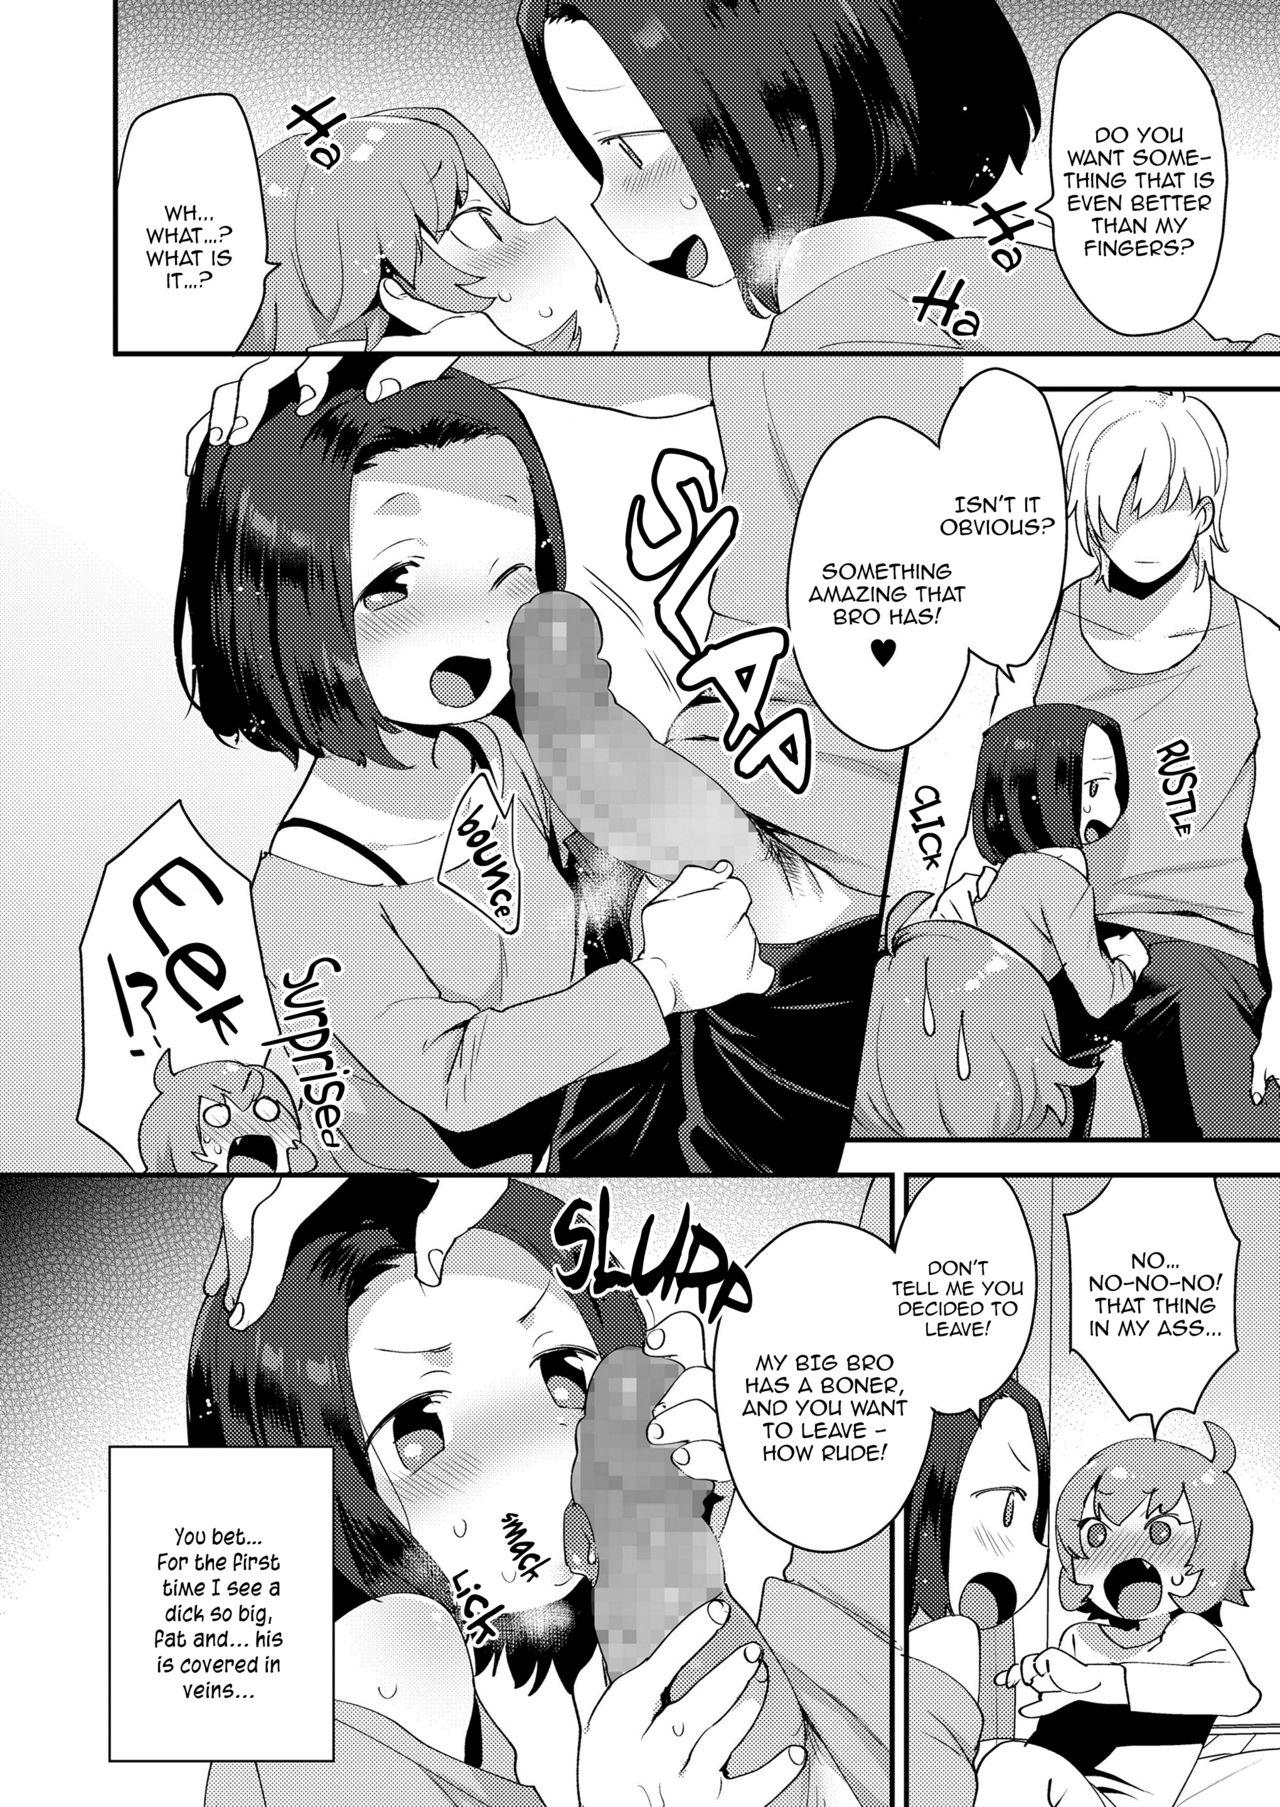 Makotokun’s After School Adventures 10